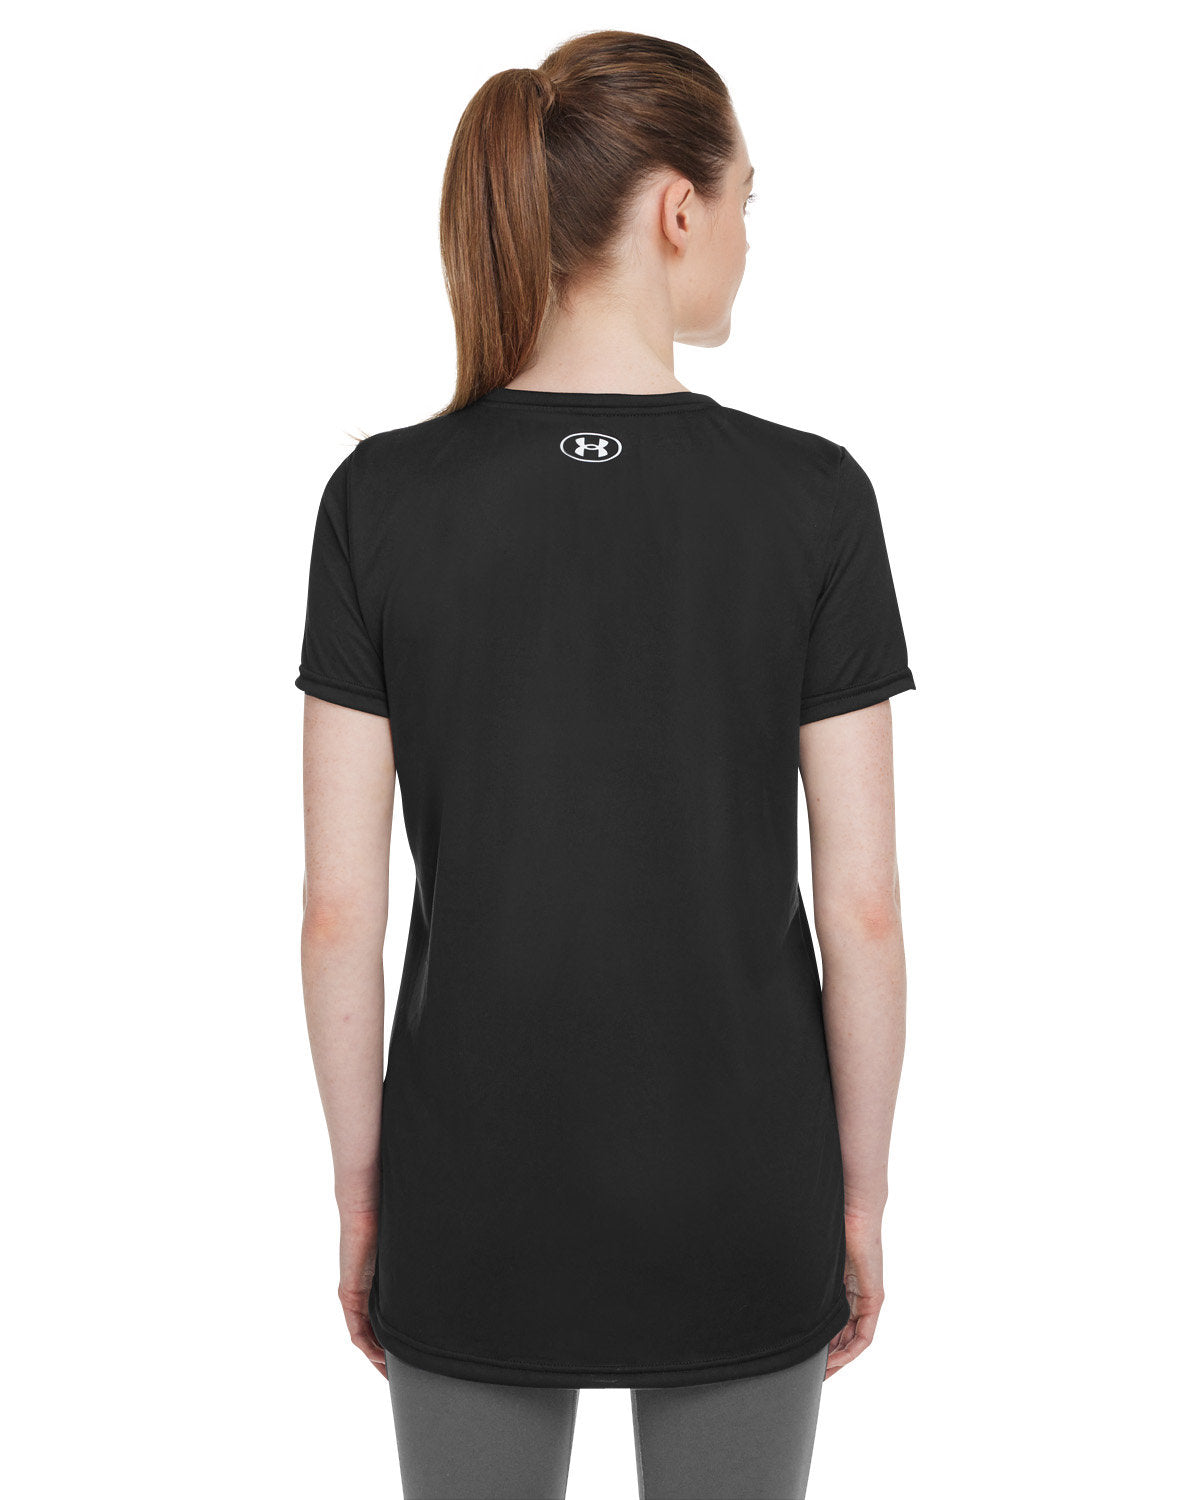 Under Armour Ladies Tech Customized T-Shirts, Black